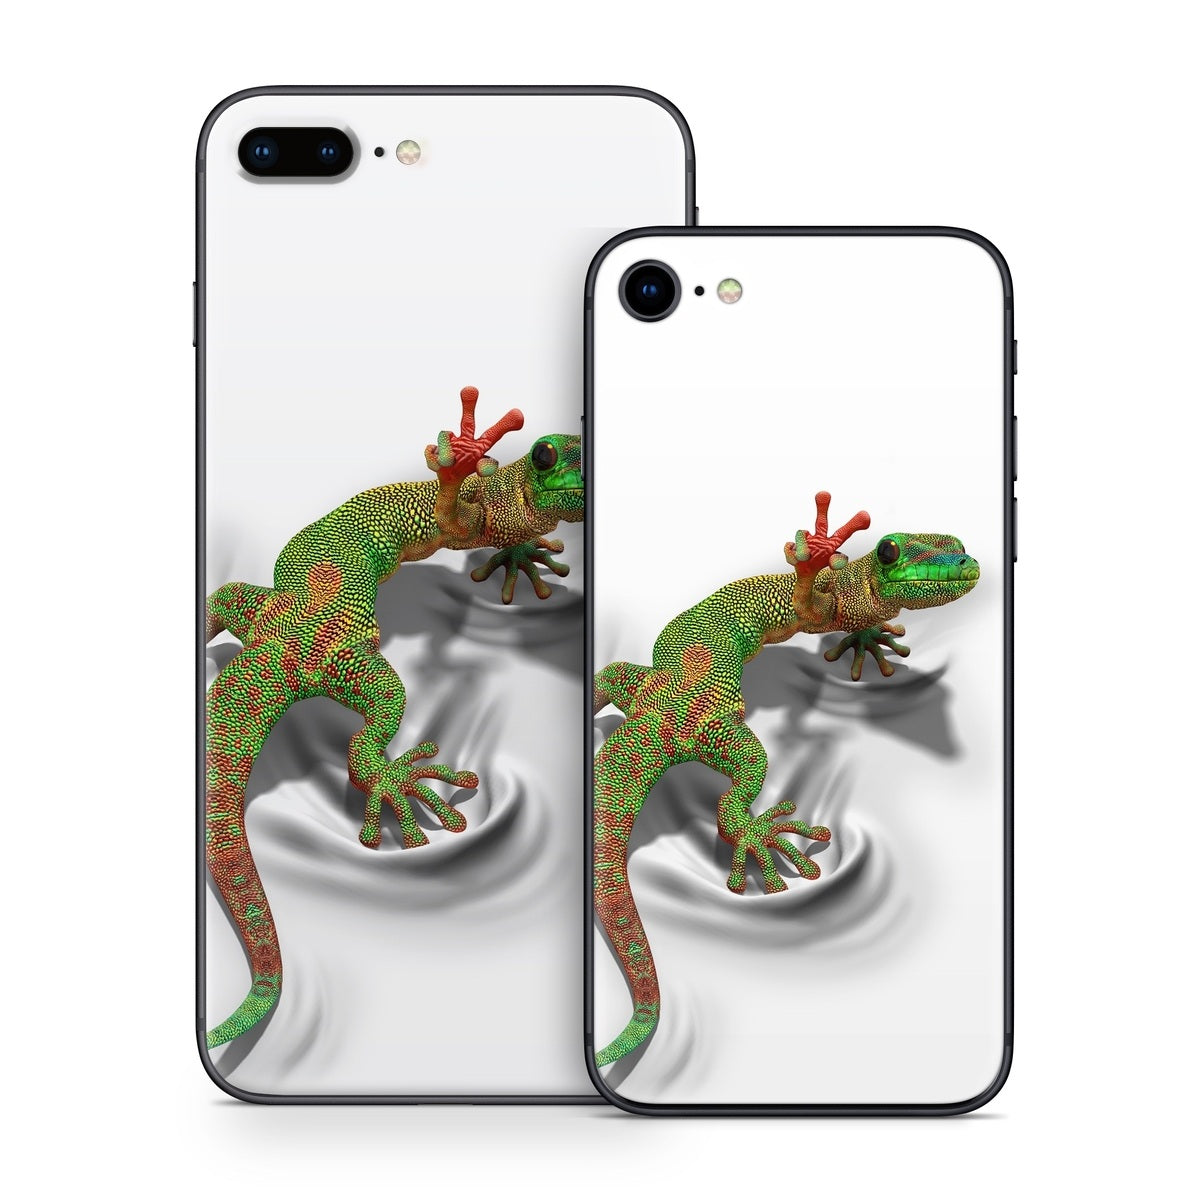 Gecko - Apple iPhone 8 Skin